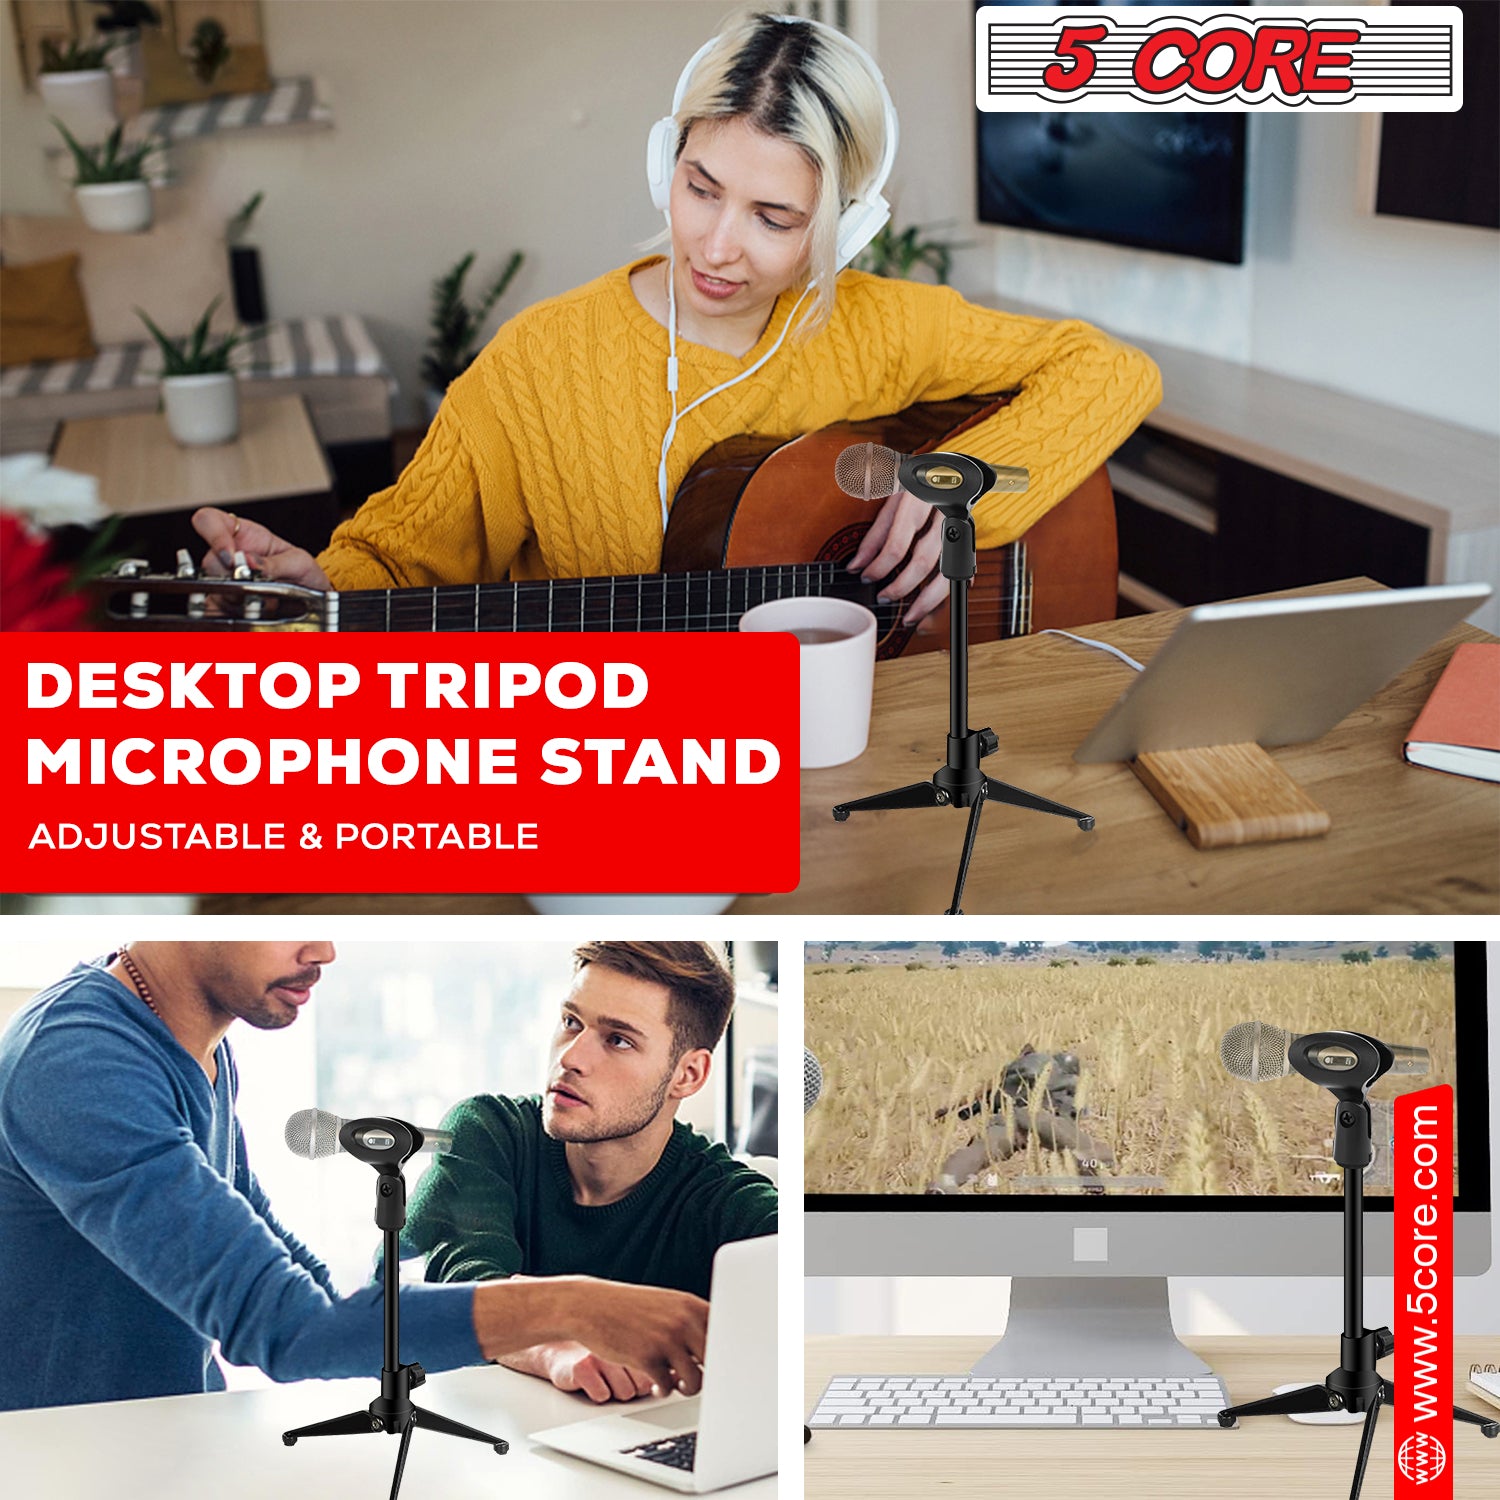 Adjustable table tripod microphone stand: Enhances audio quality.